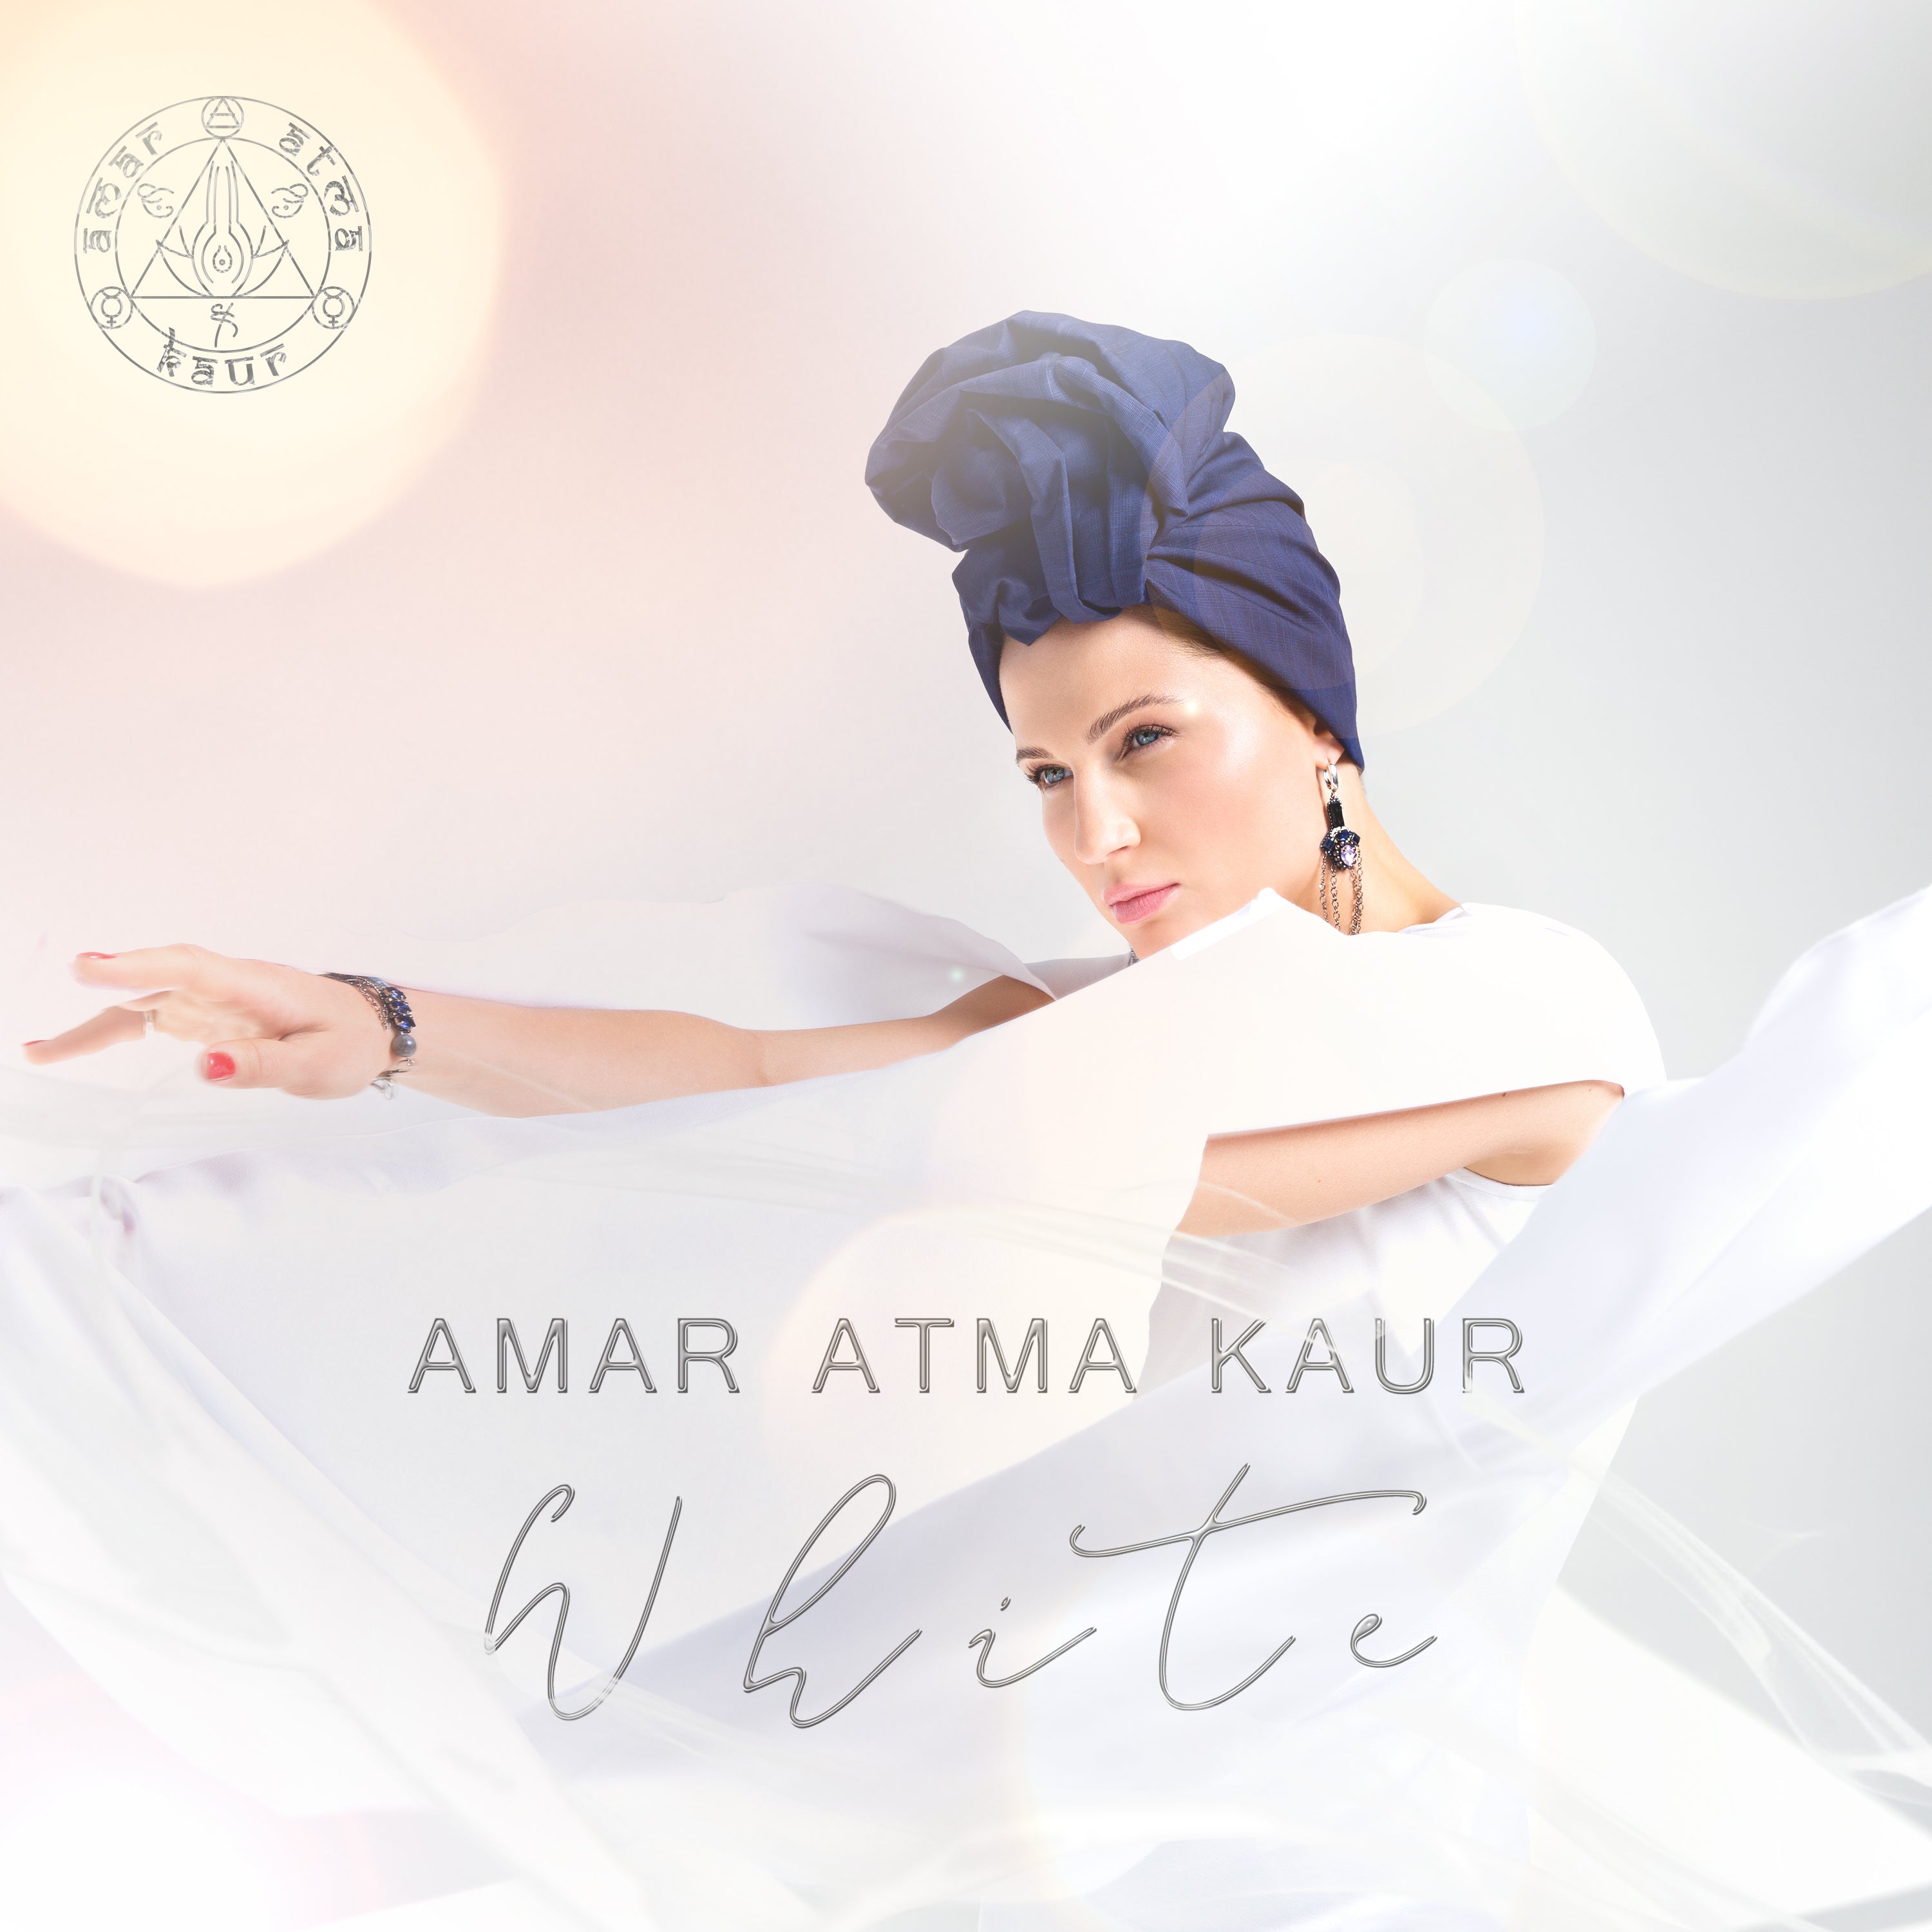 White - Amar Atma Kaur komplett